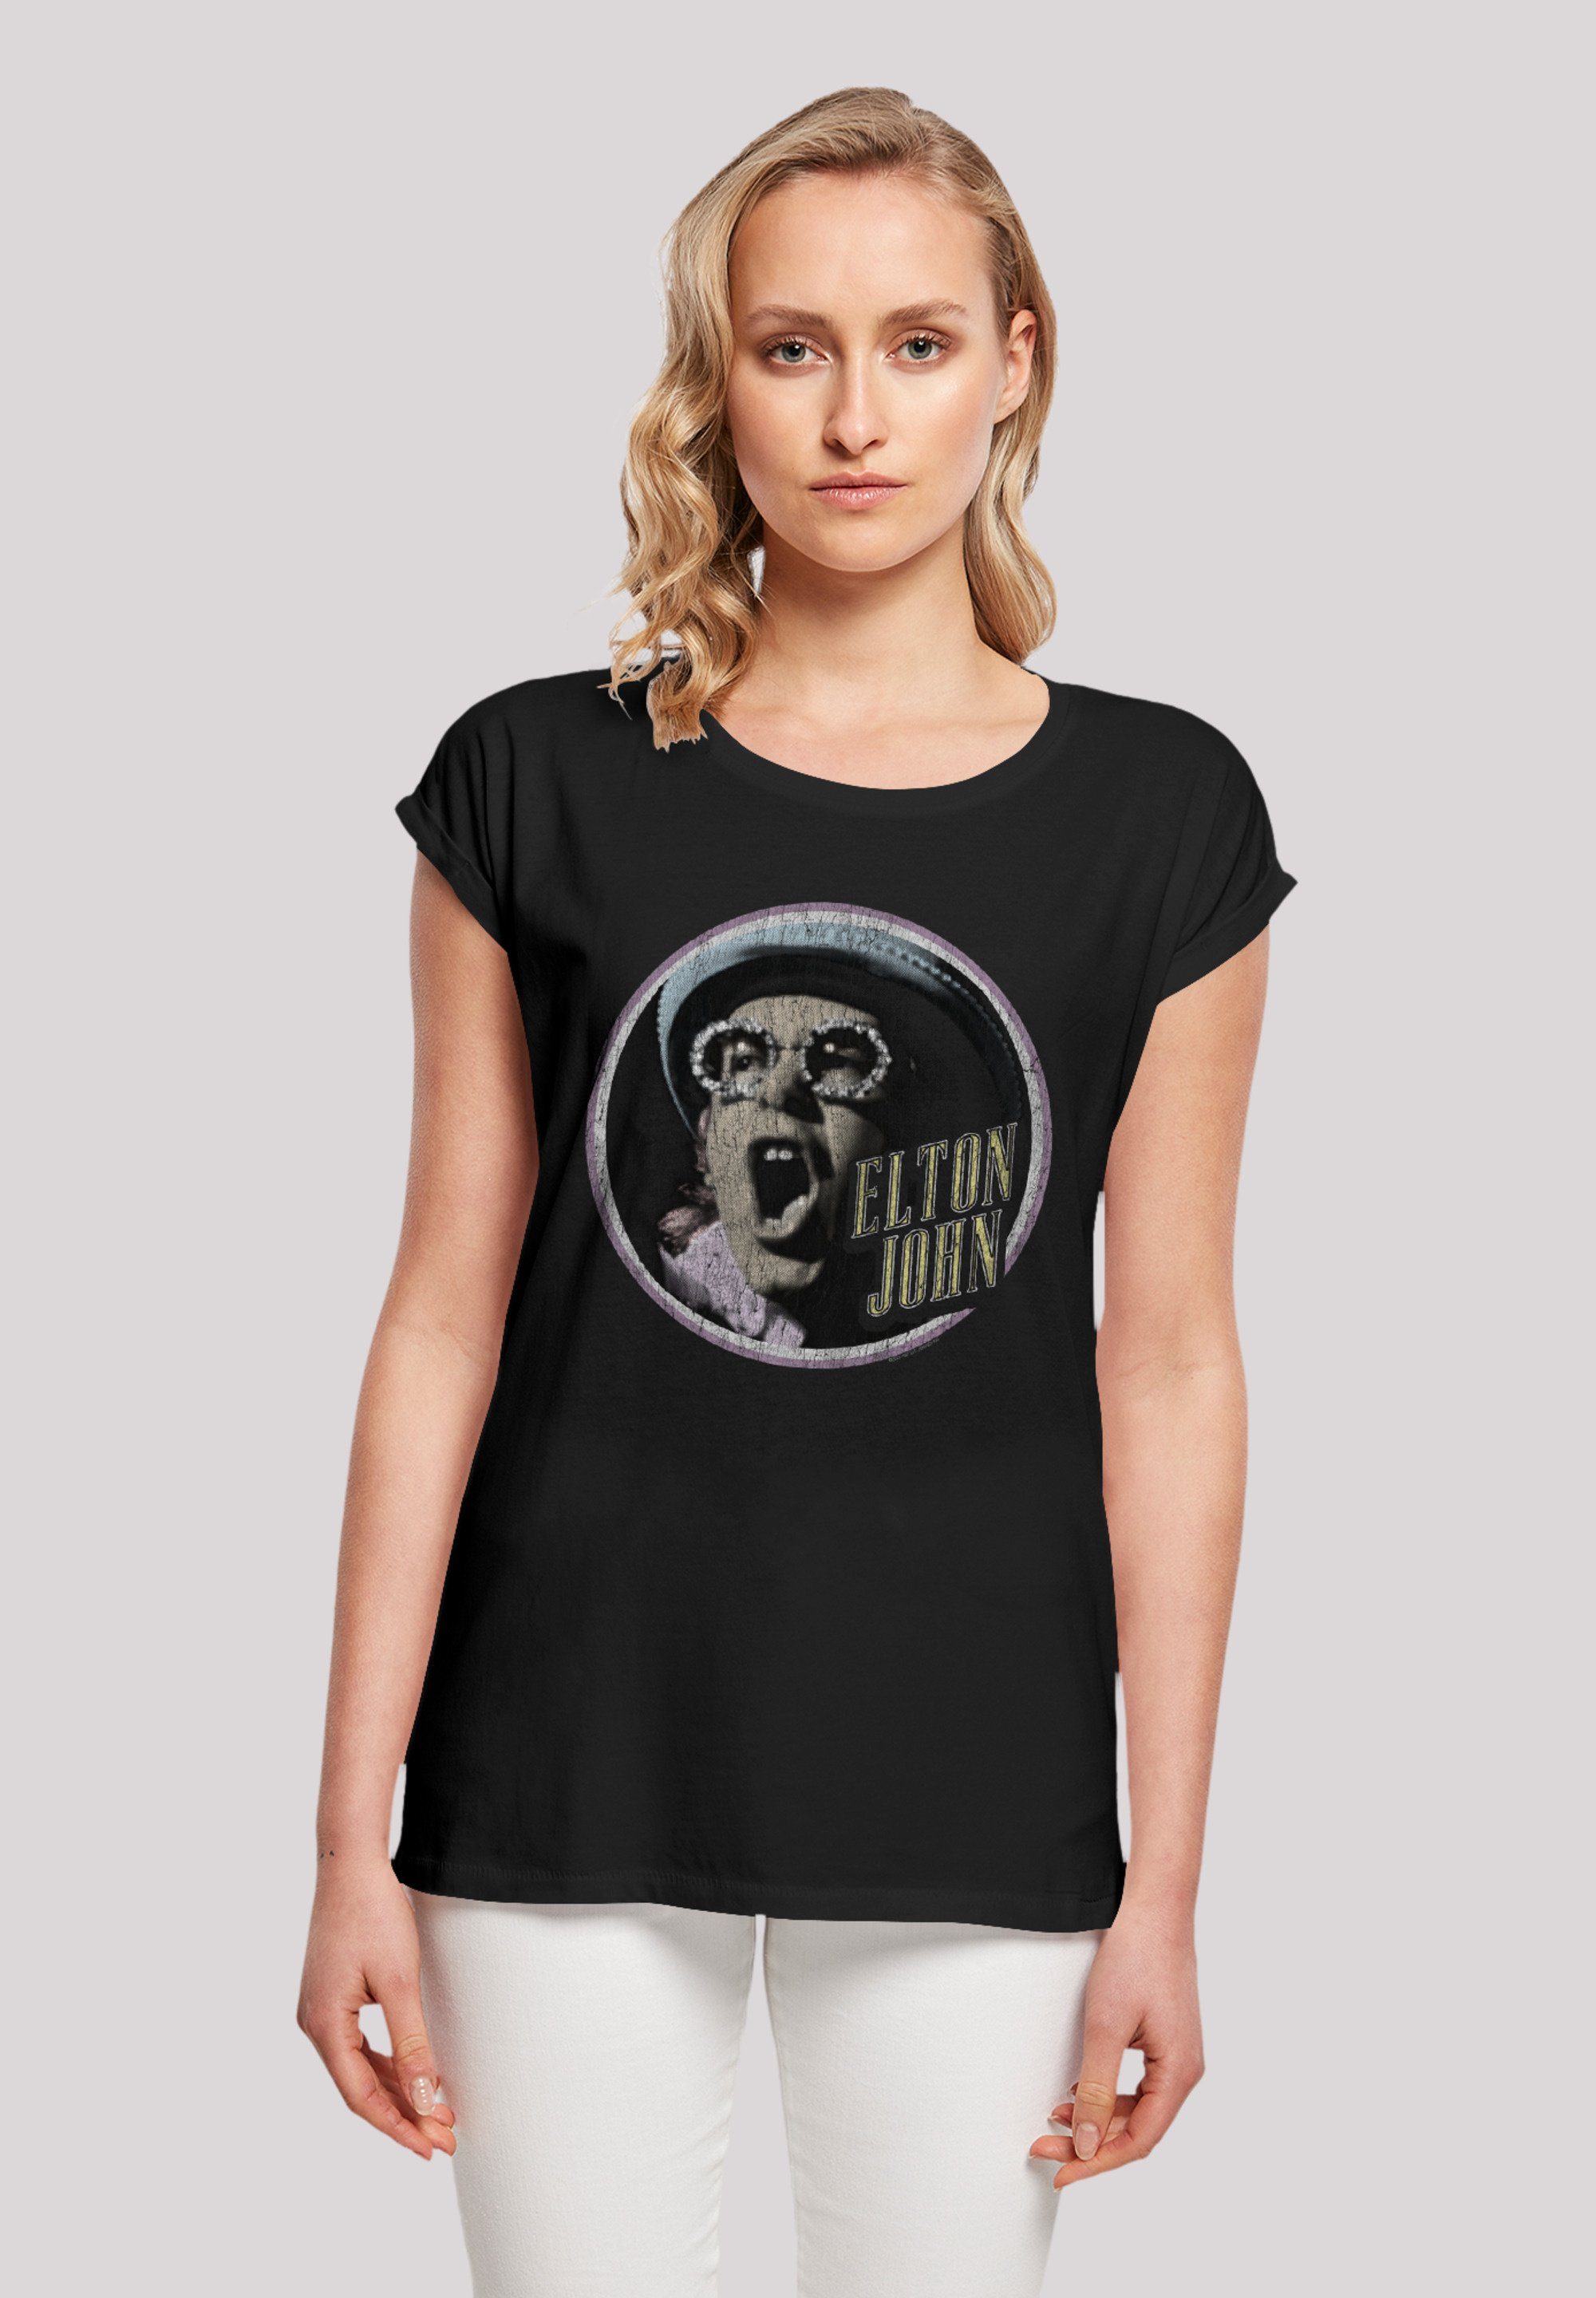 F4NT4STIC T-Shirt Elton John Vintage Circle Premium Qualität schwarz